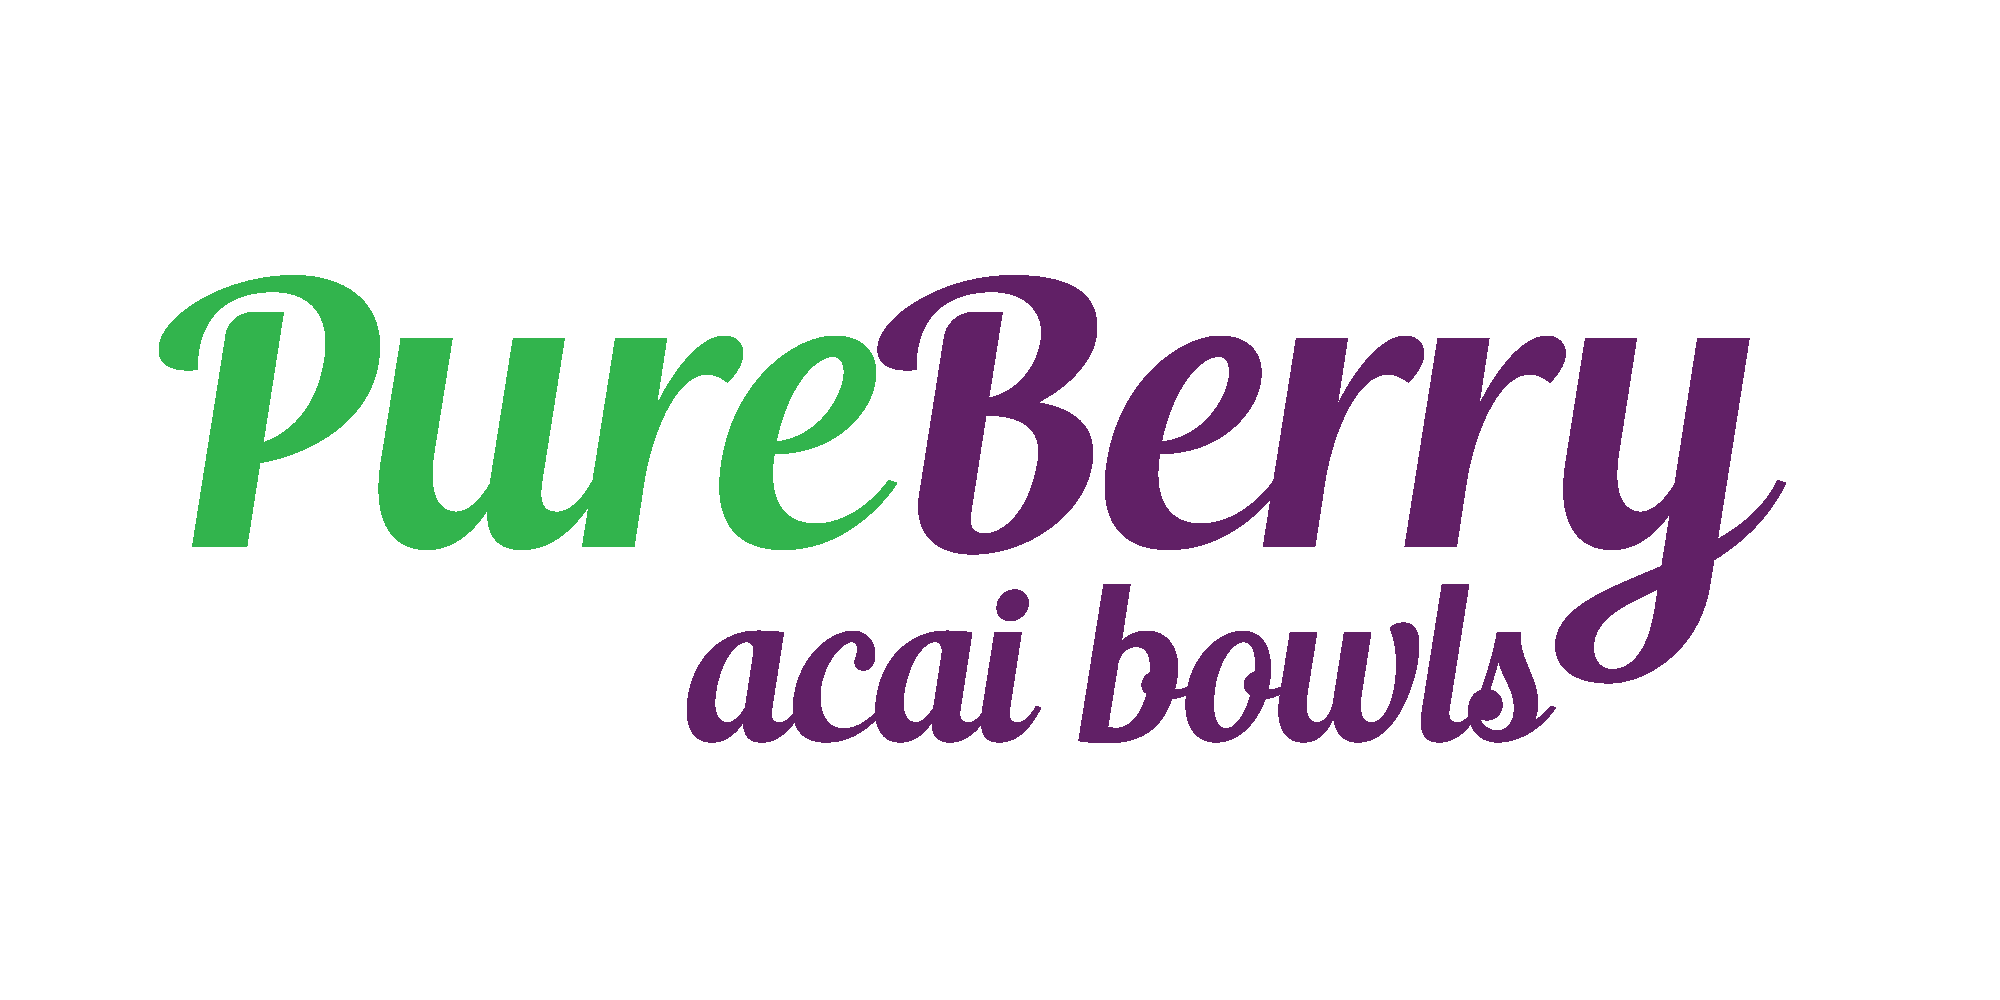 PureBerry Acai Bowls of Naperville